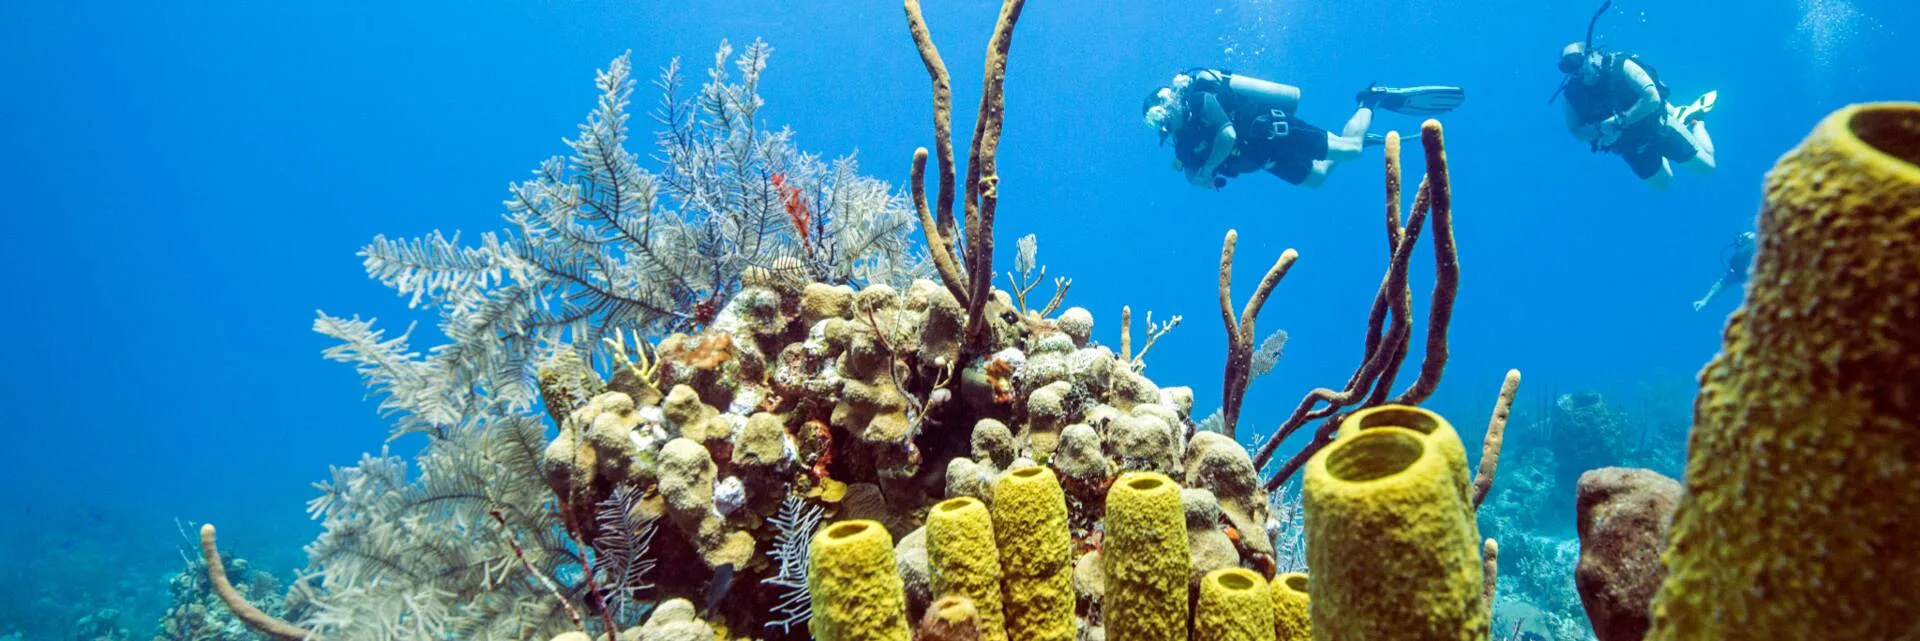 Scuba Diving, Turks & Caicos (image courtesy of Visit TCI)